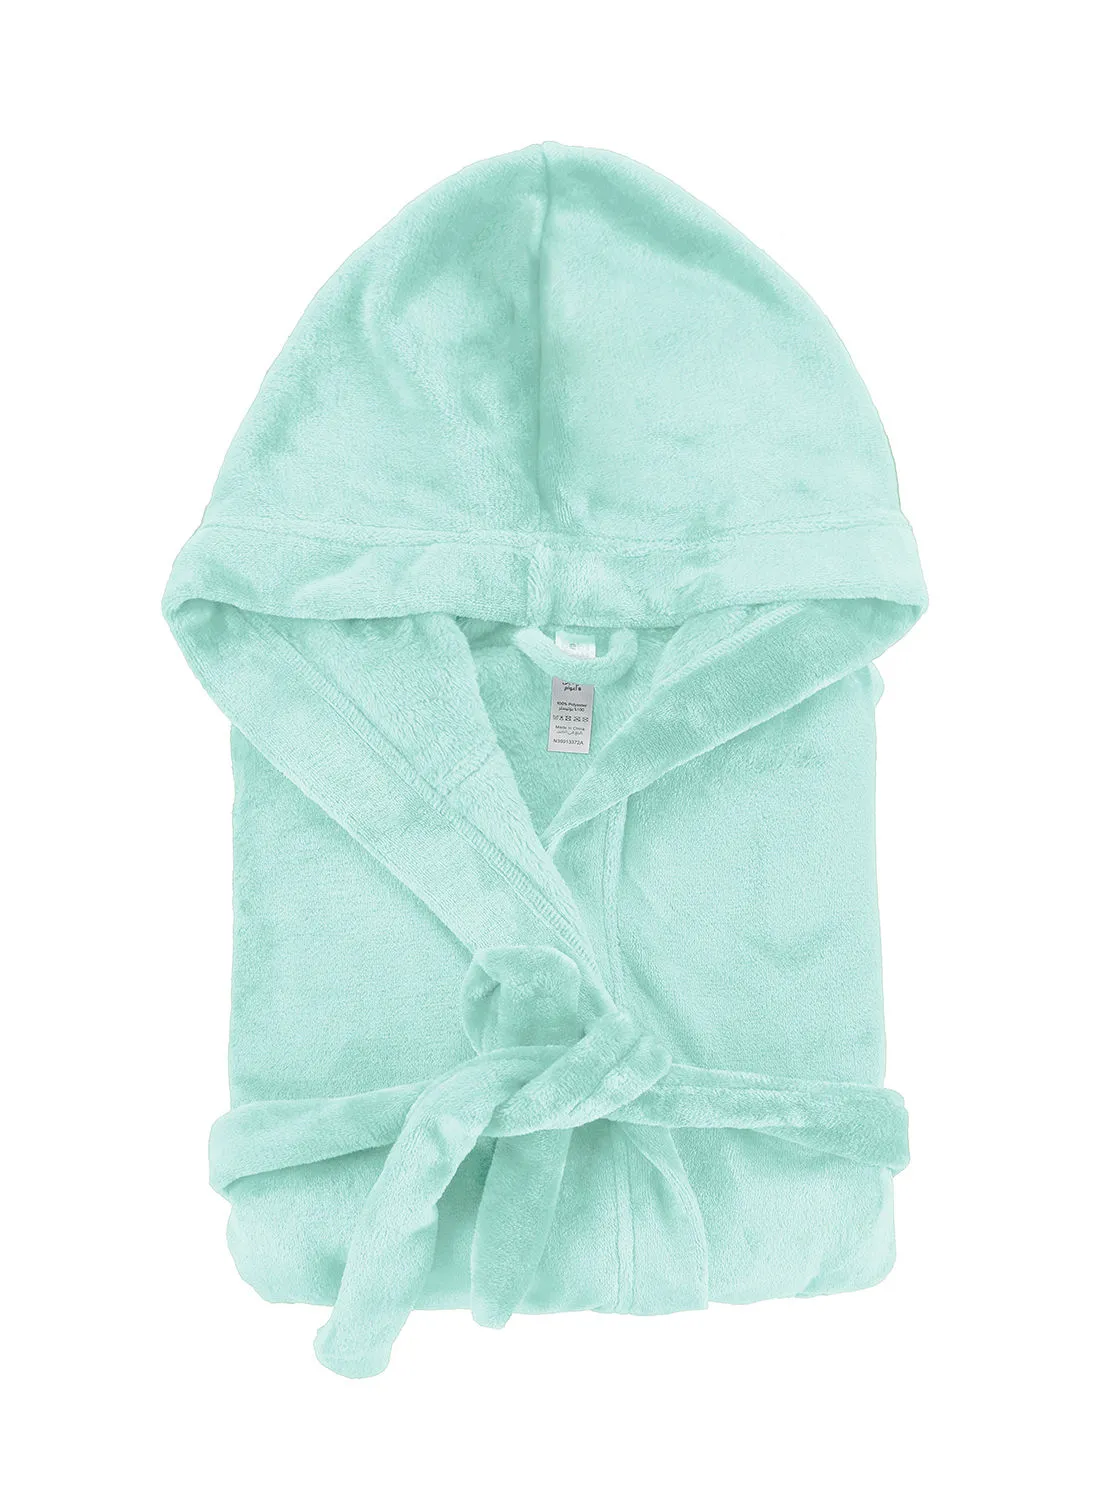 Bebi Bebi Kids Bathroom Towel Set - 255 GSM 100% Cotton - Jade Green Color - Lightweight - Kids Hooded Comfortable - For Girls & Boys - 1 Piece